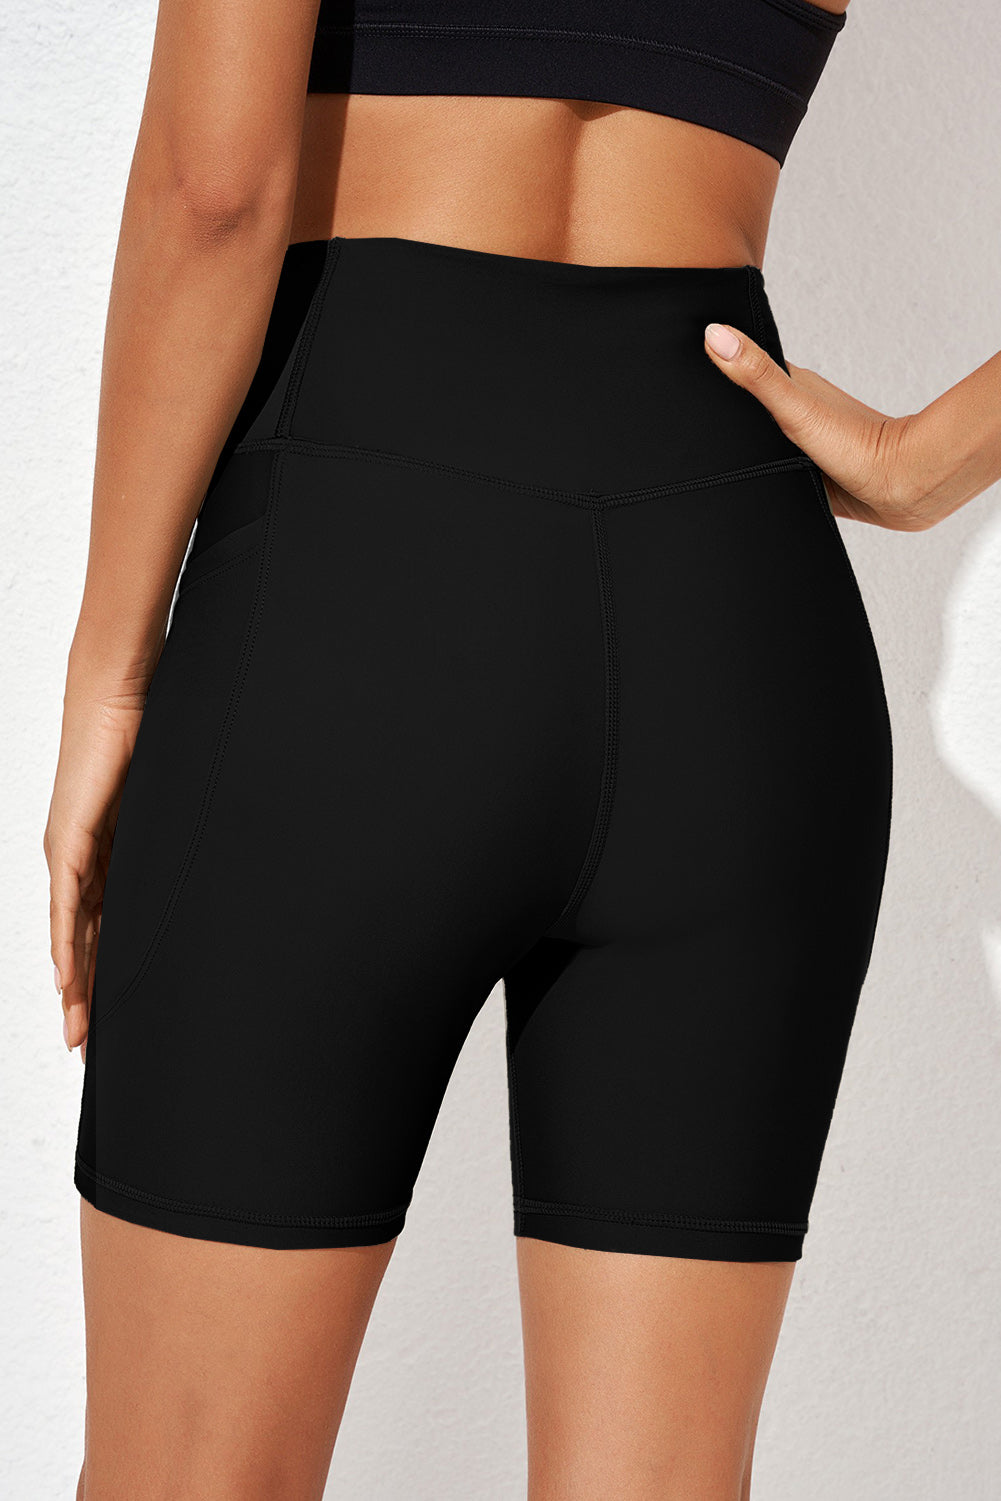 Crne sportske bermude bikini kratke hlače s prekriženim strukom